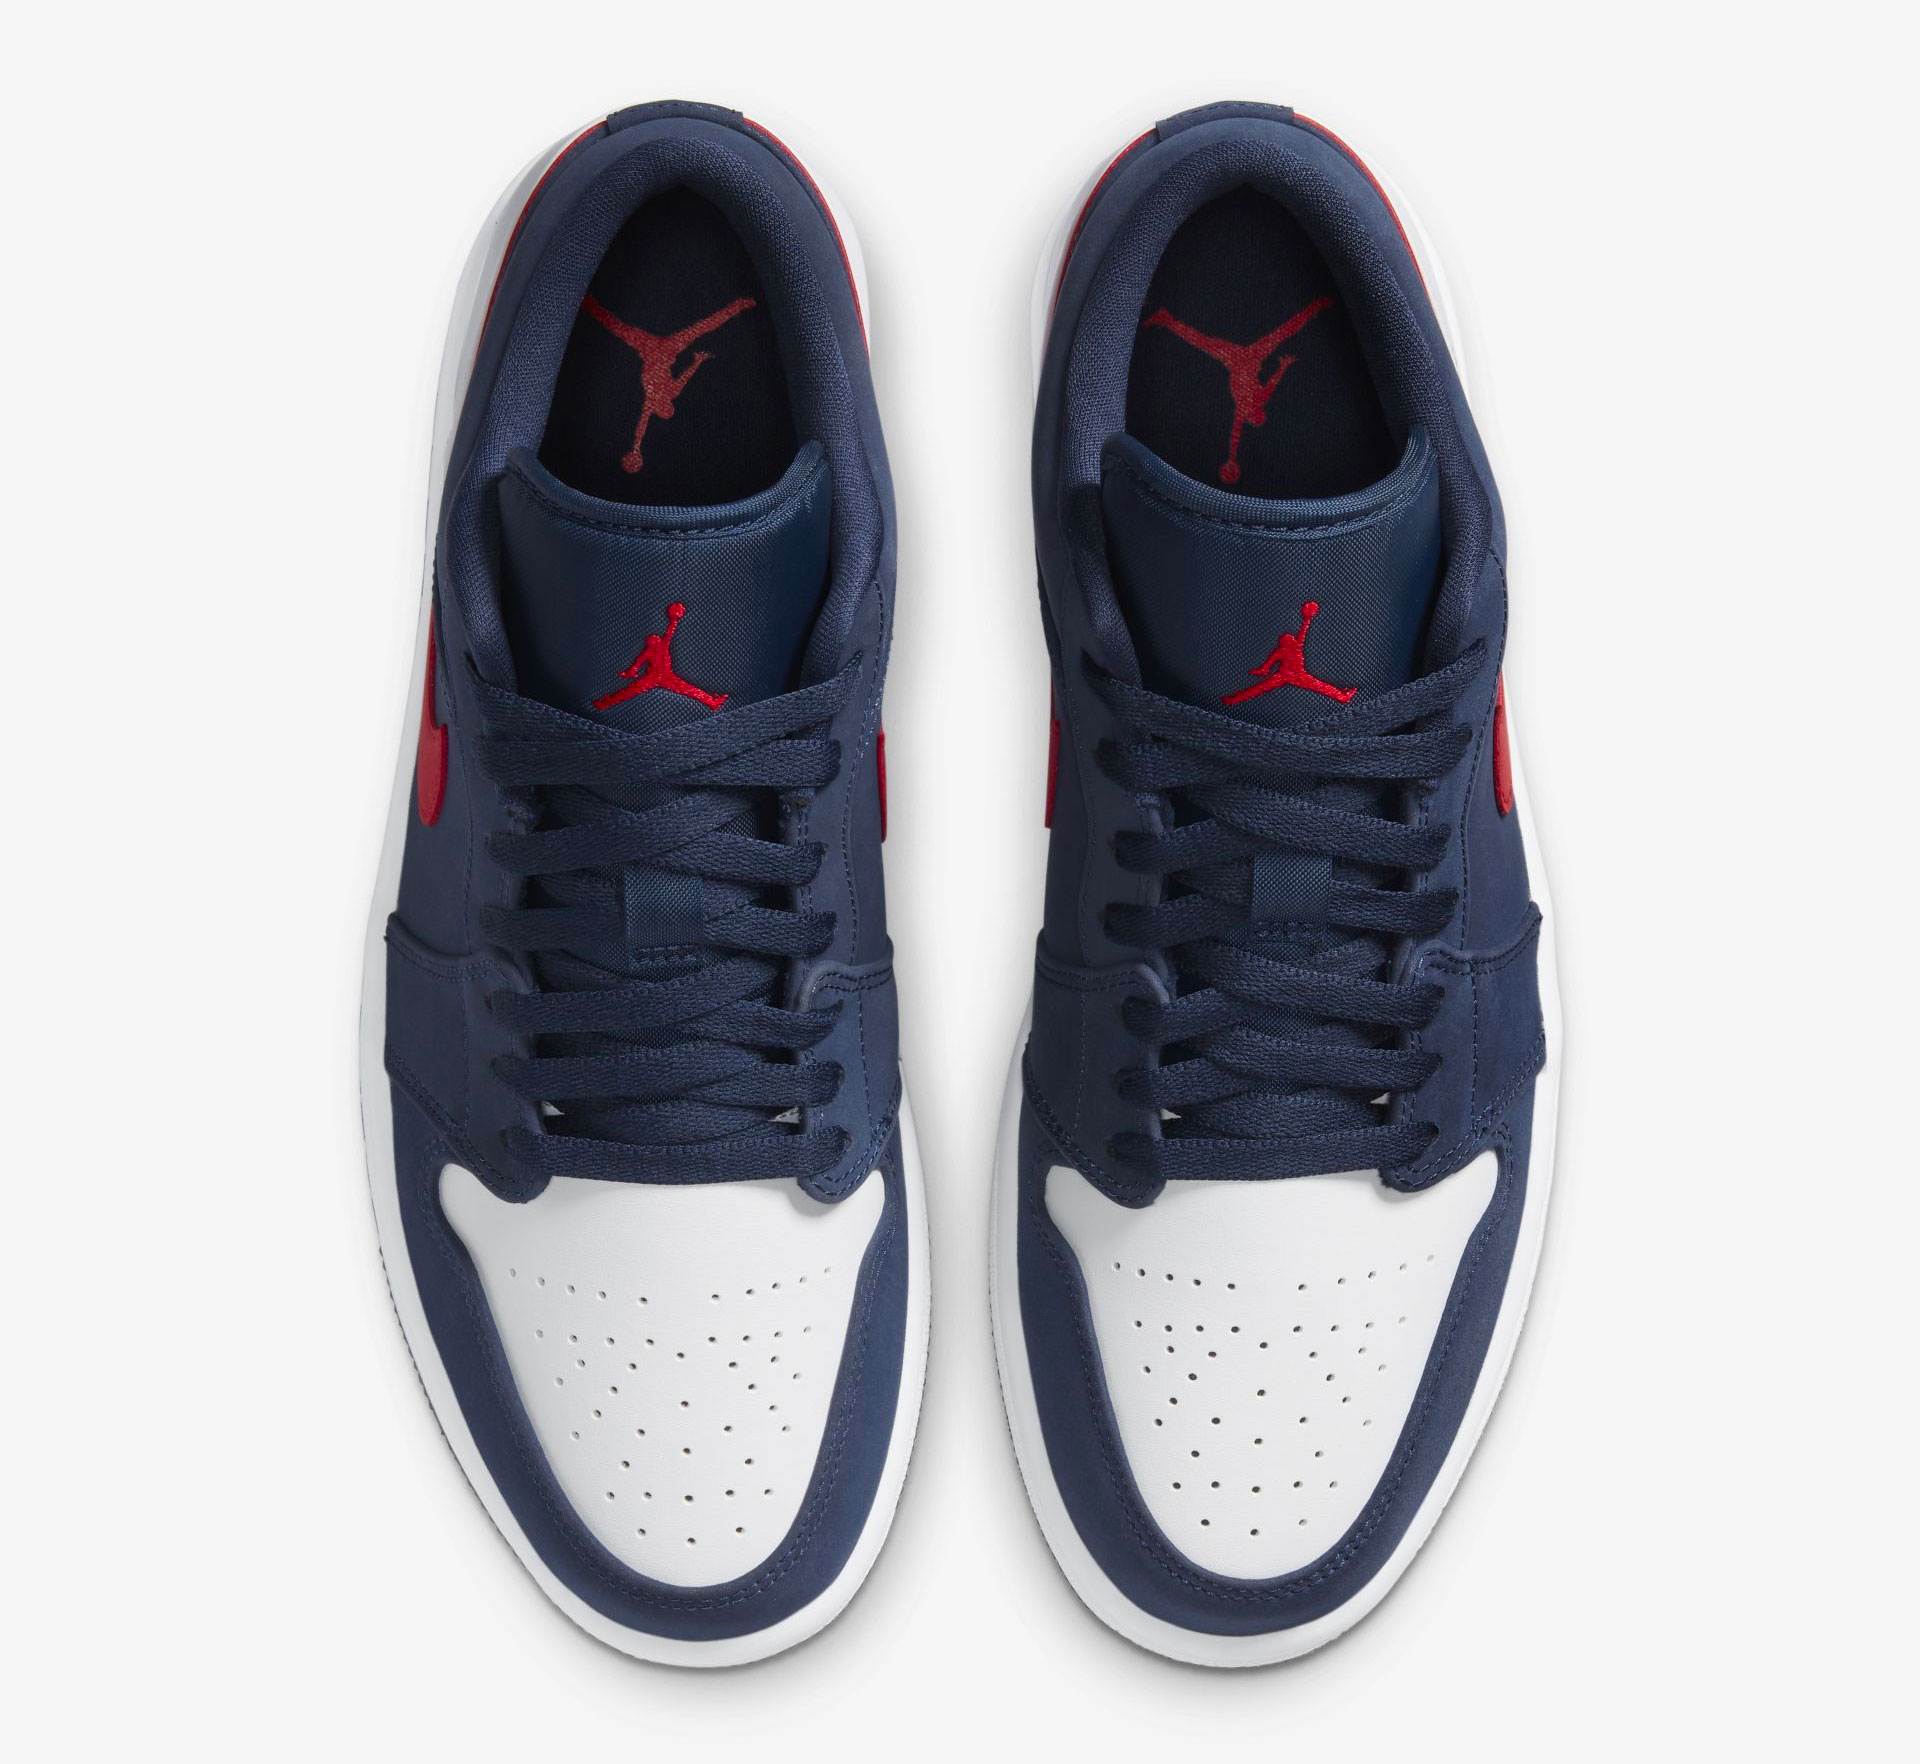 Air Jordan 1 Low USA Clothing Match | SneakerFits.com